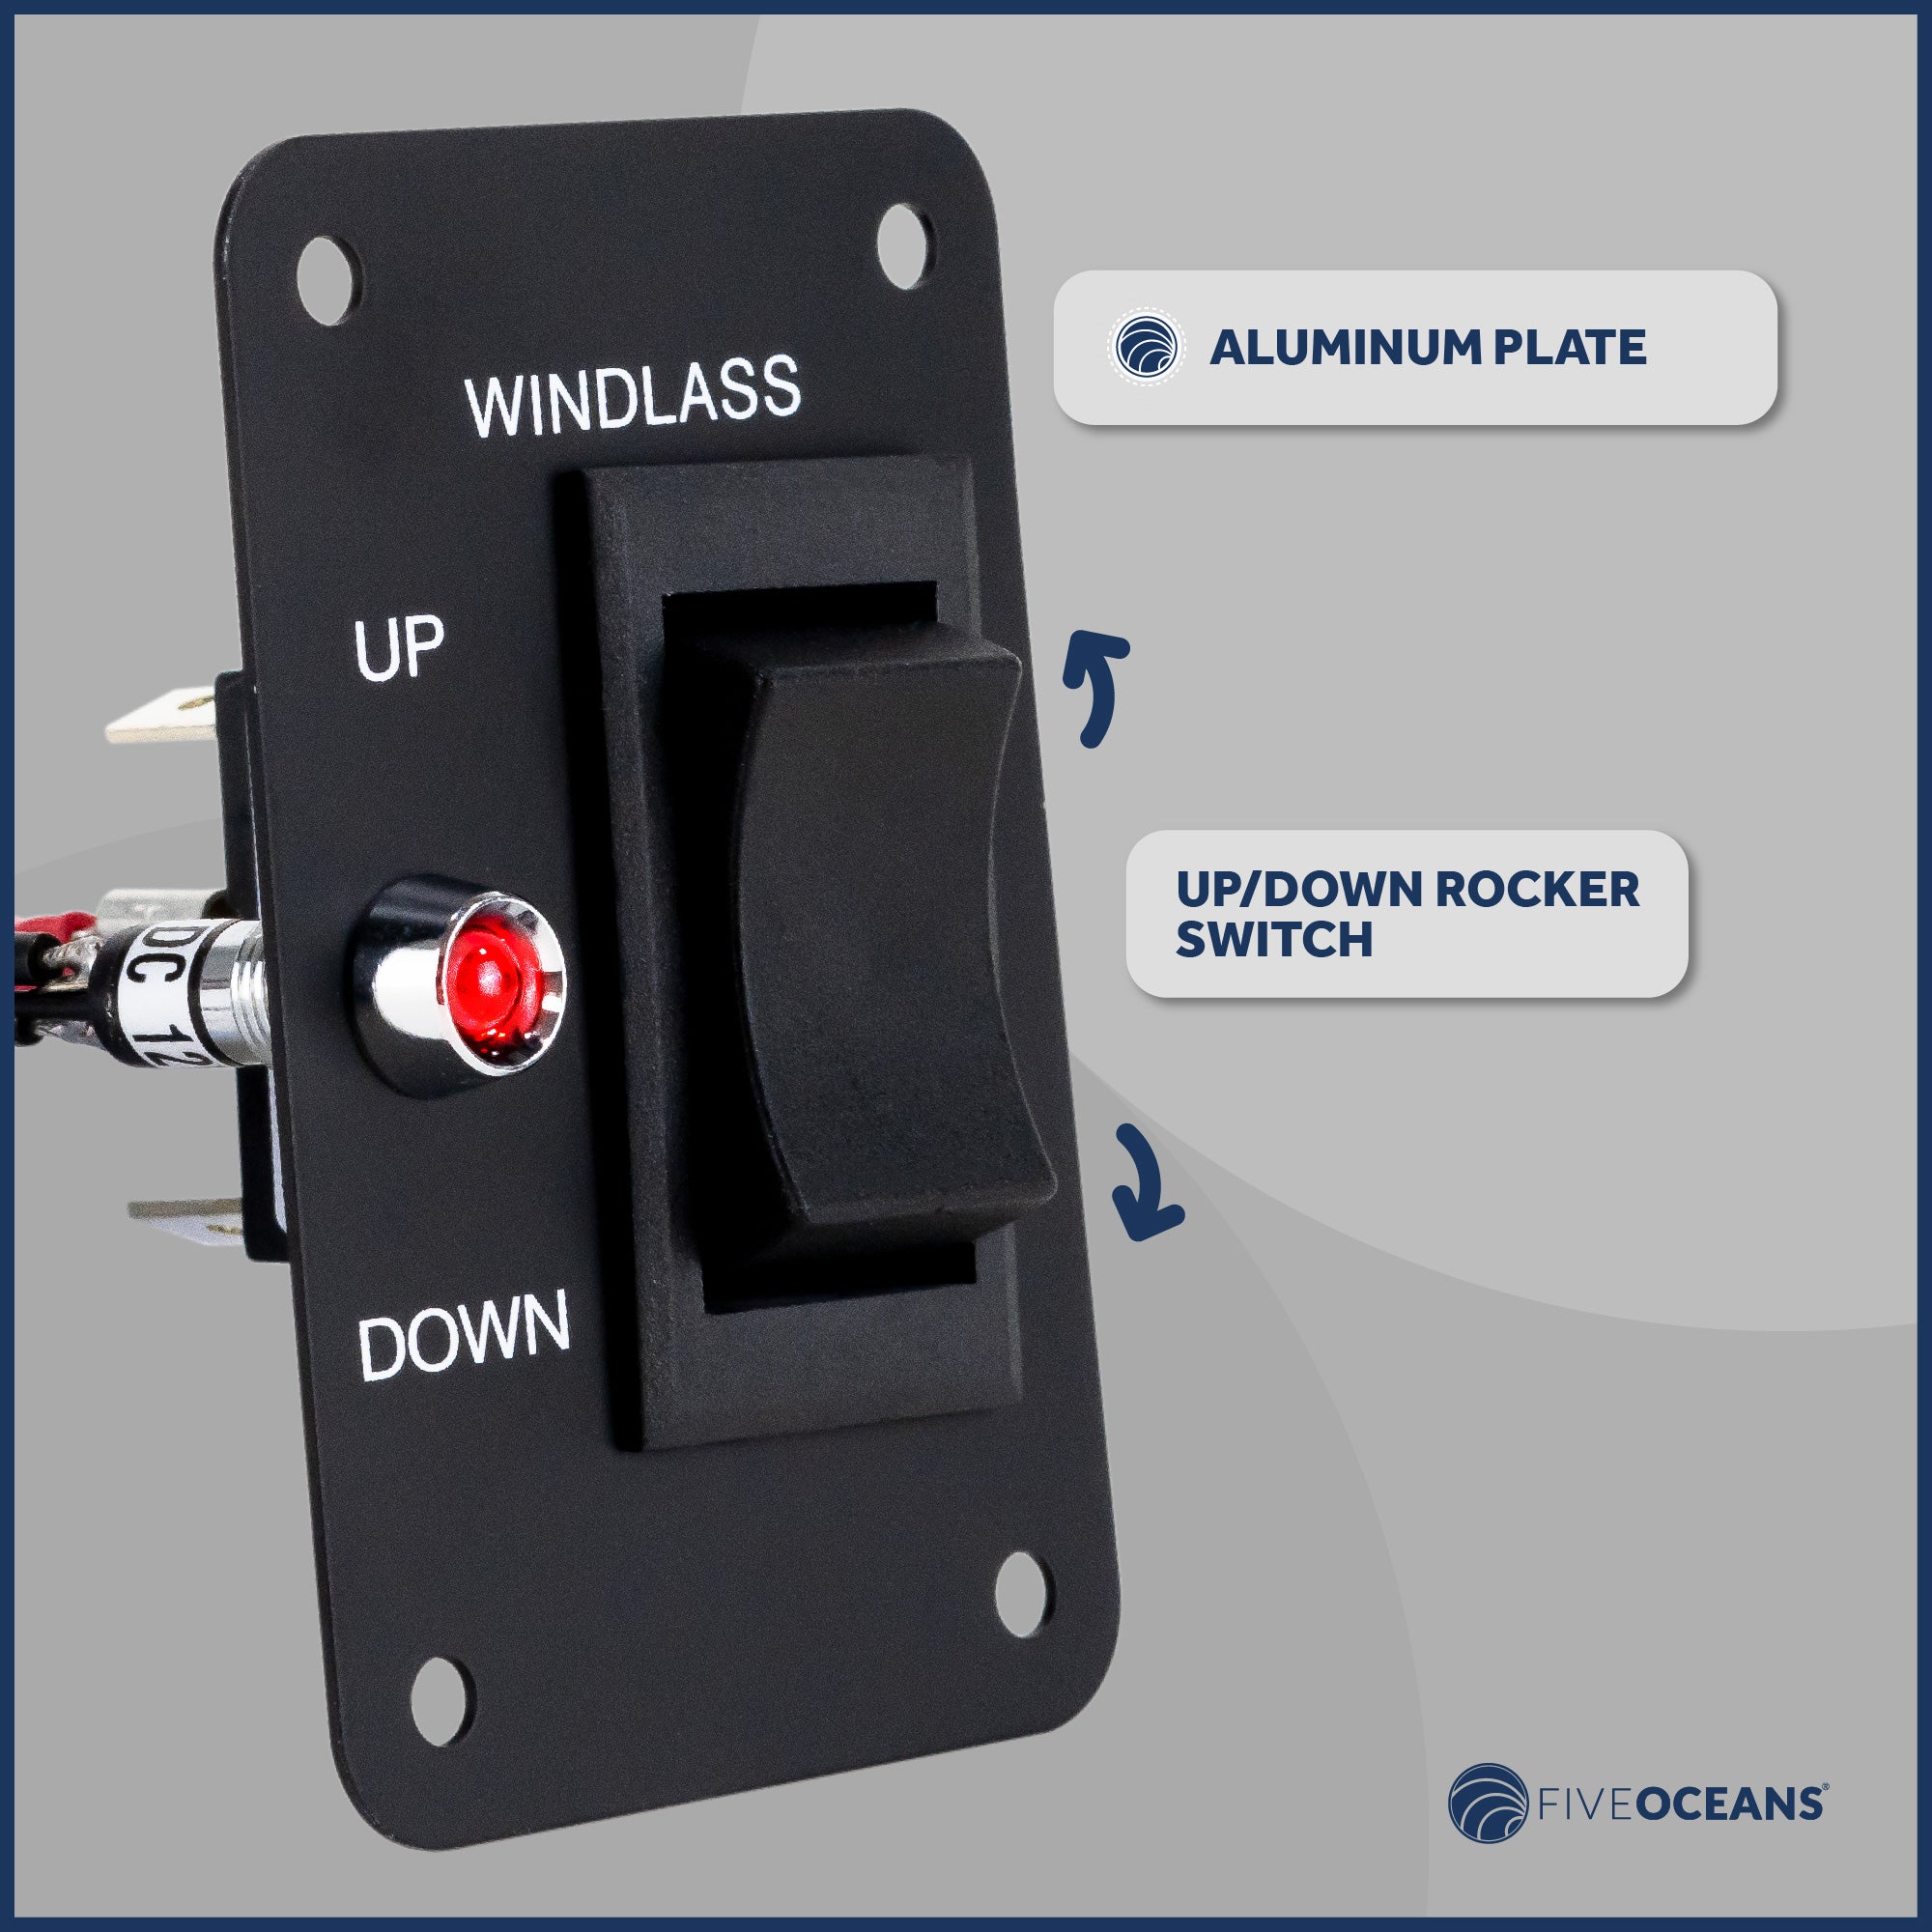 Anchor Windlass Rocker Switch Panel, 12V - FO3739